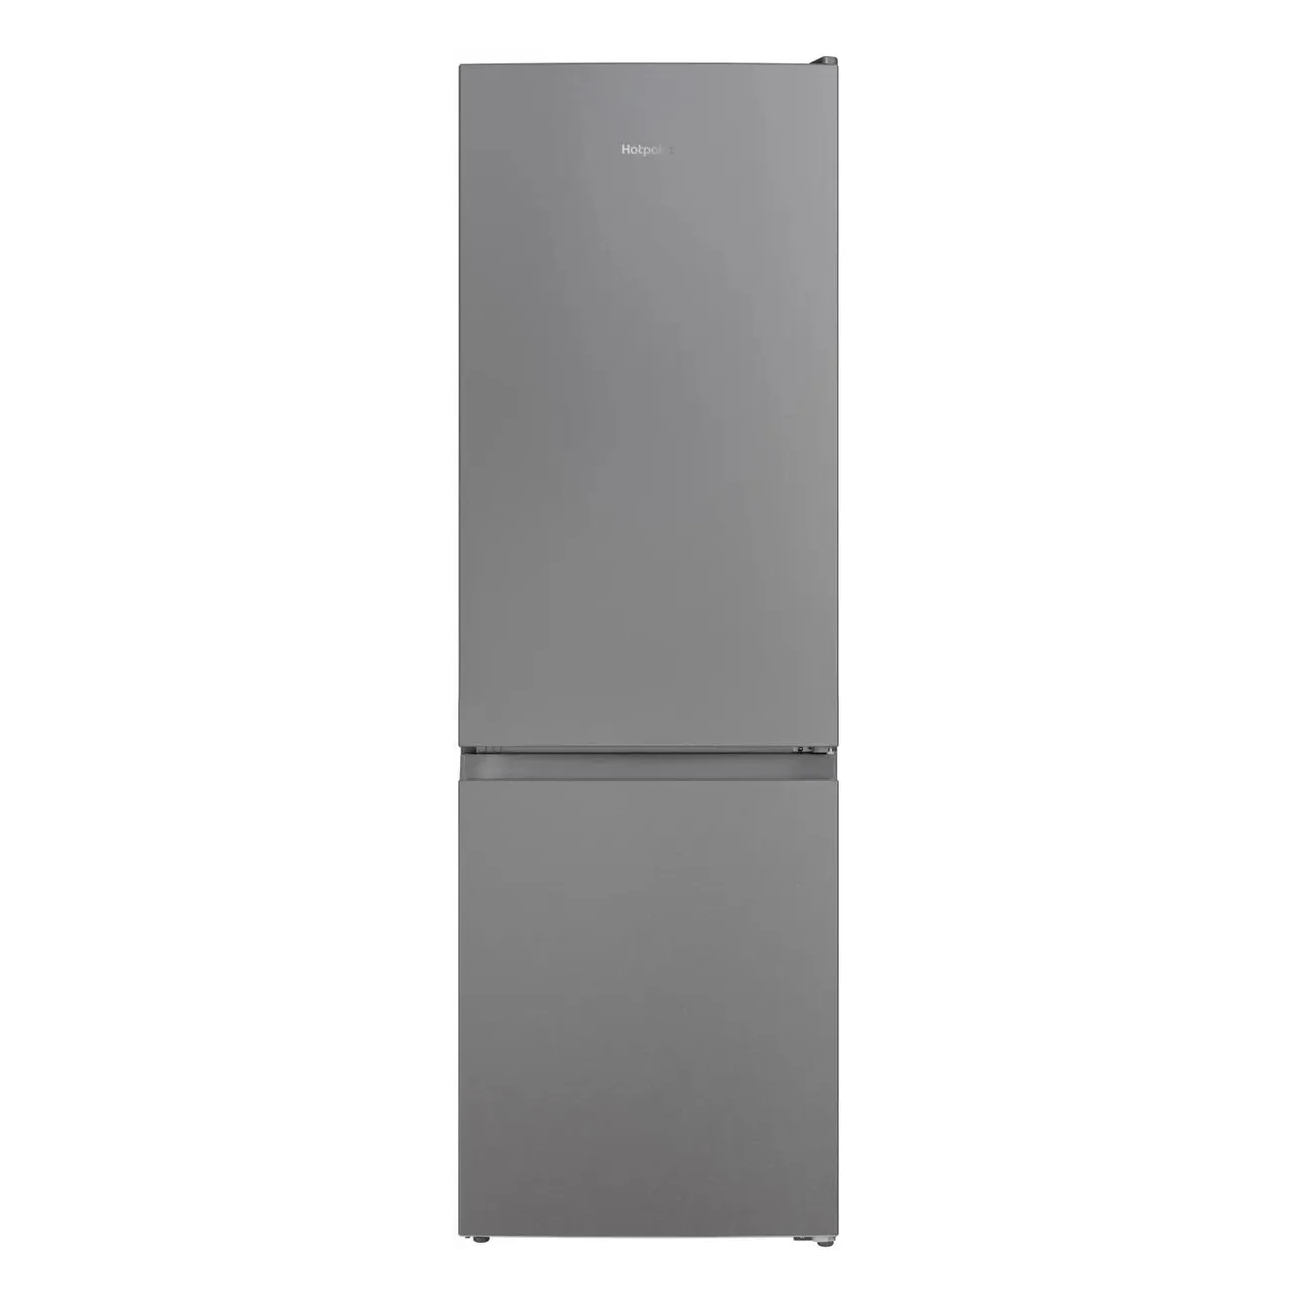 Холодильник HotPoint HT 4180 S серебристый двухкамерный холодильник hotpoint ht 4180 s серебристый